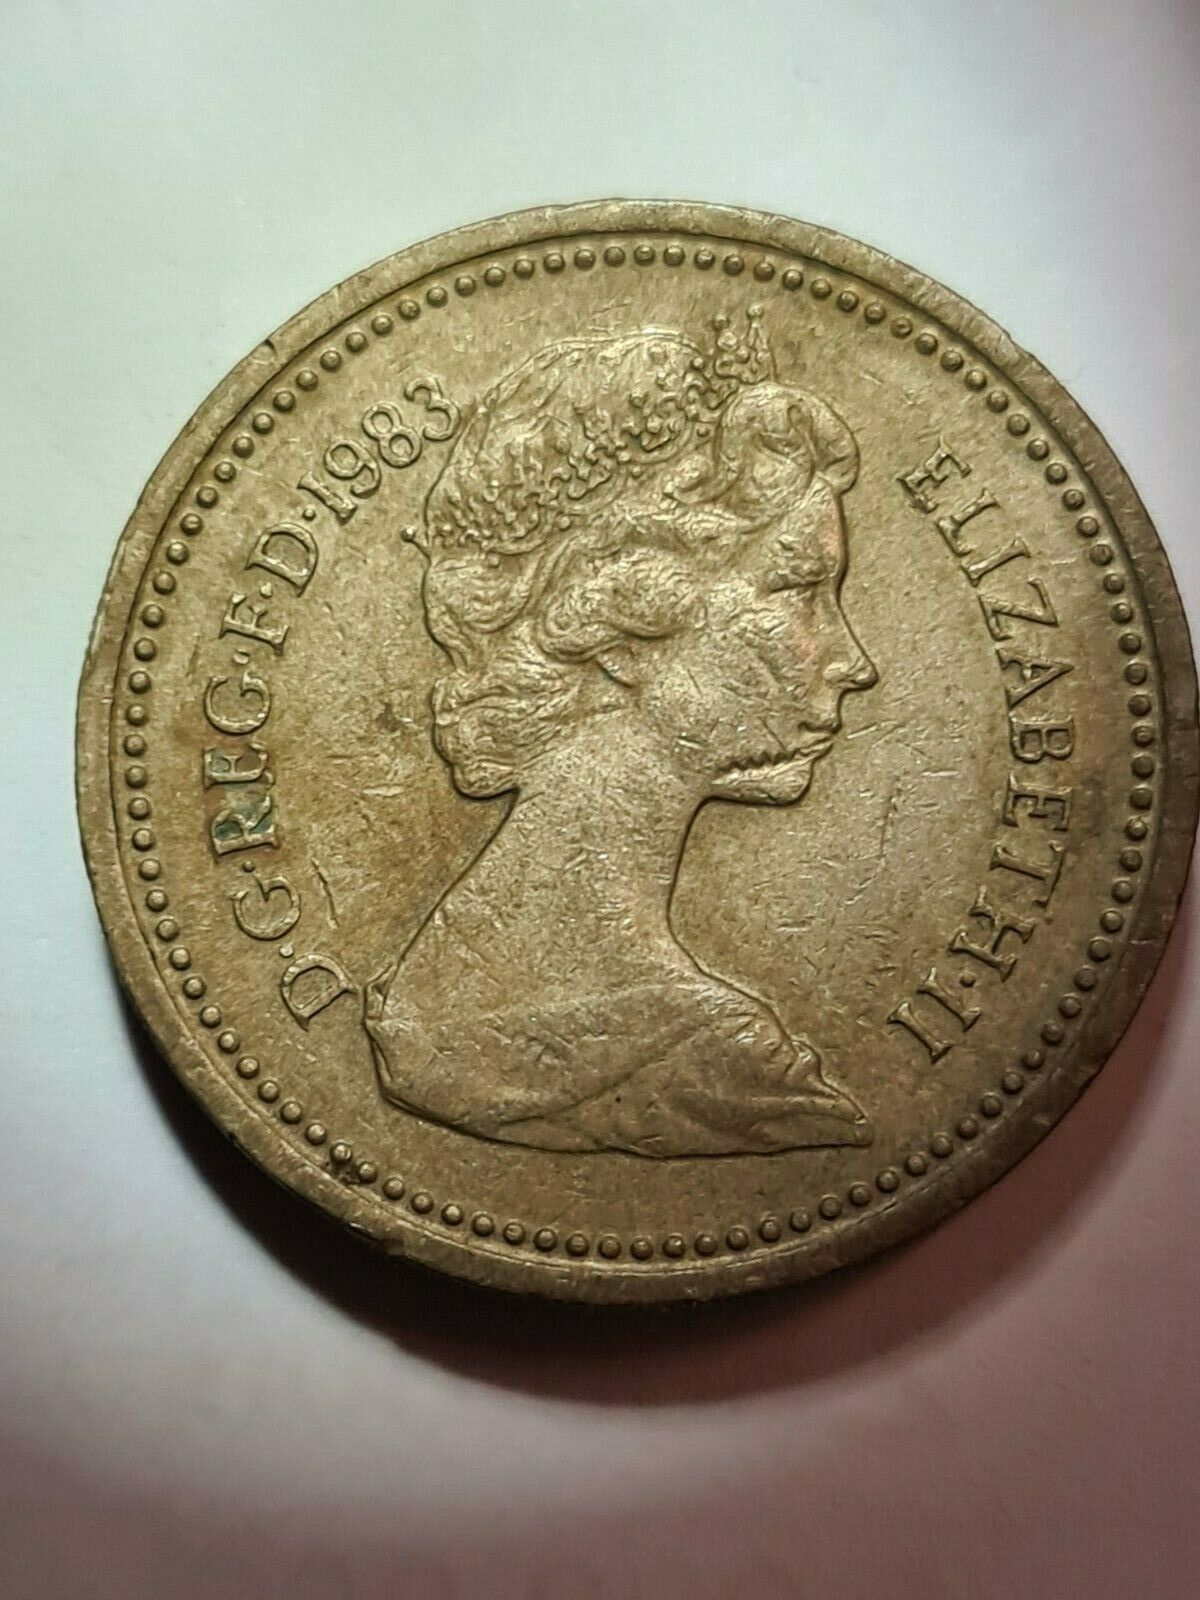 1983 english pound coin value